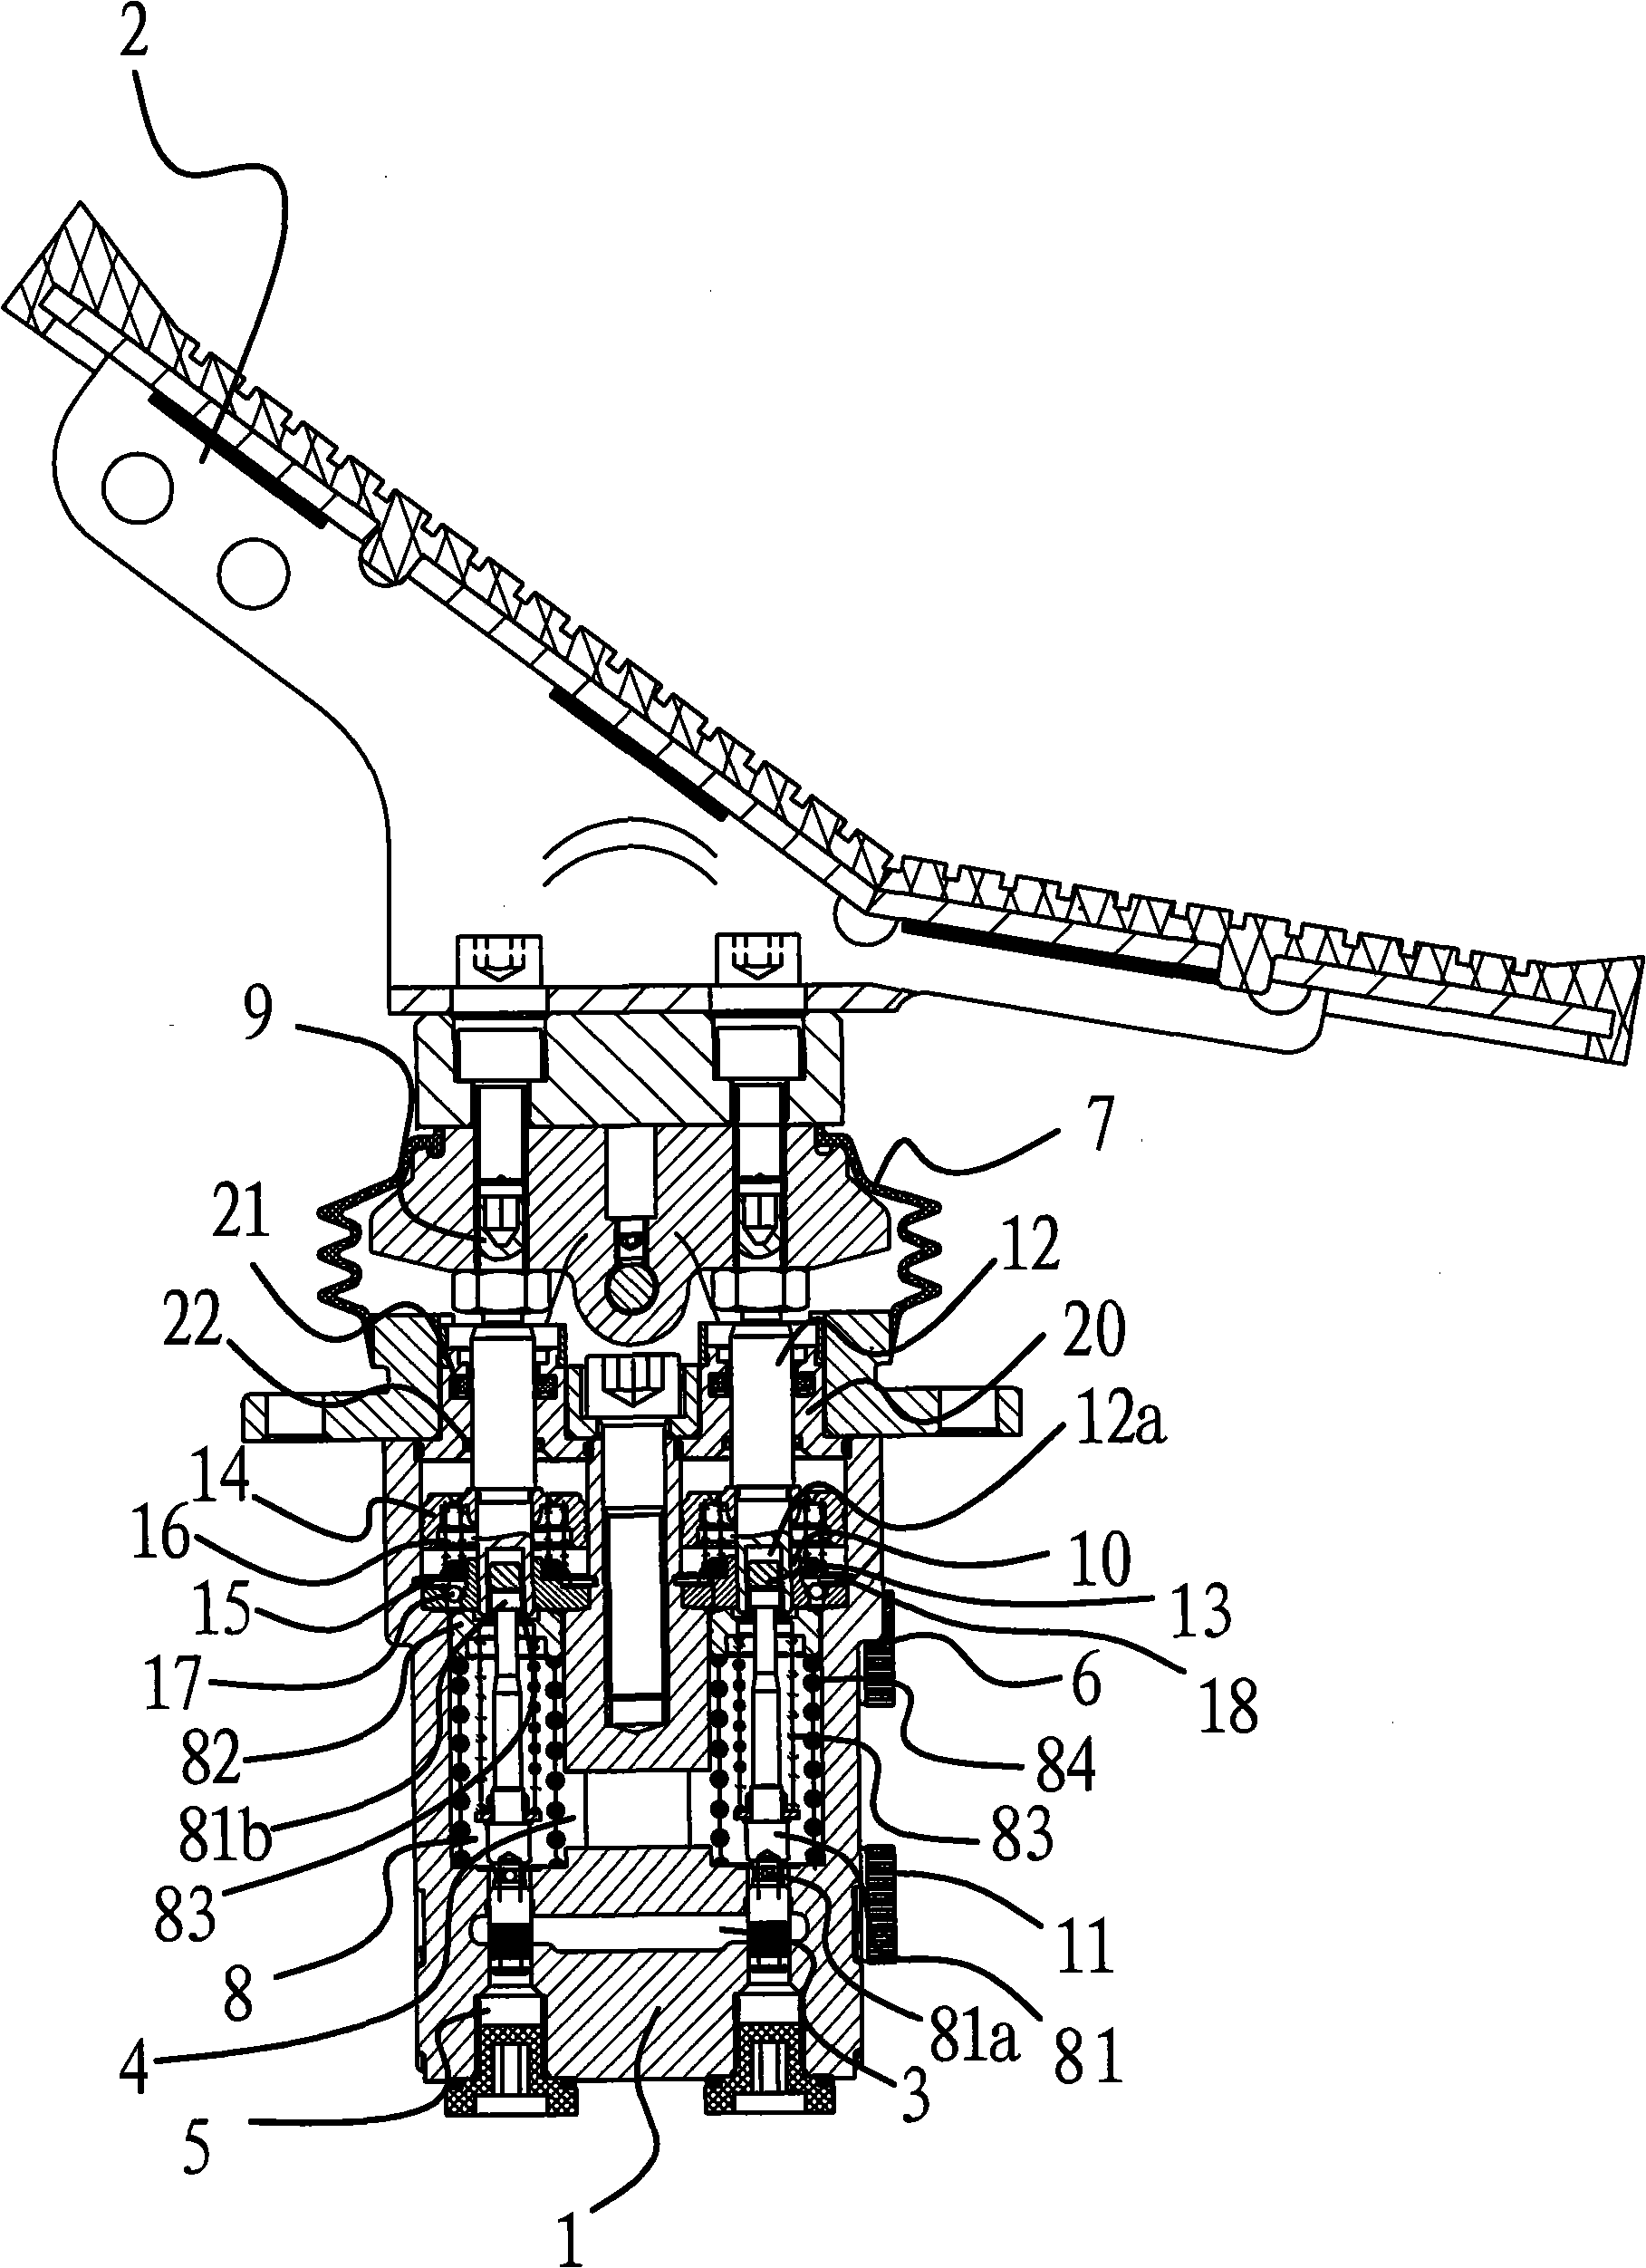 Variable pin pilot valve